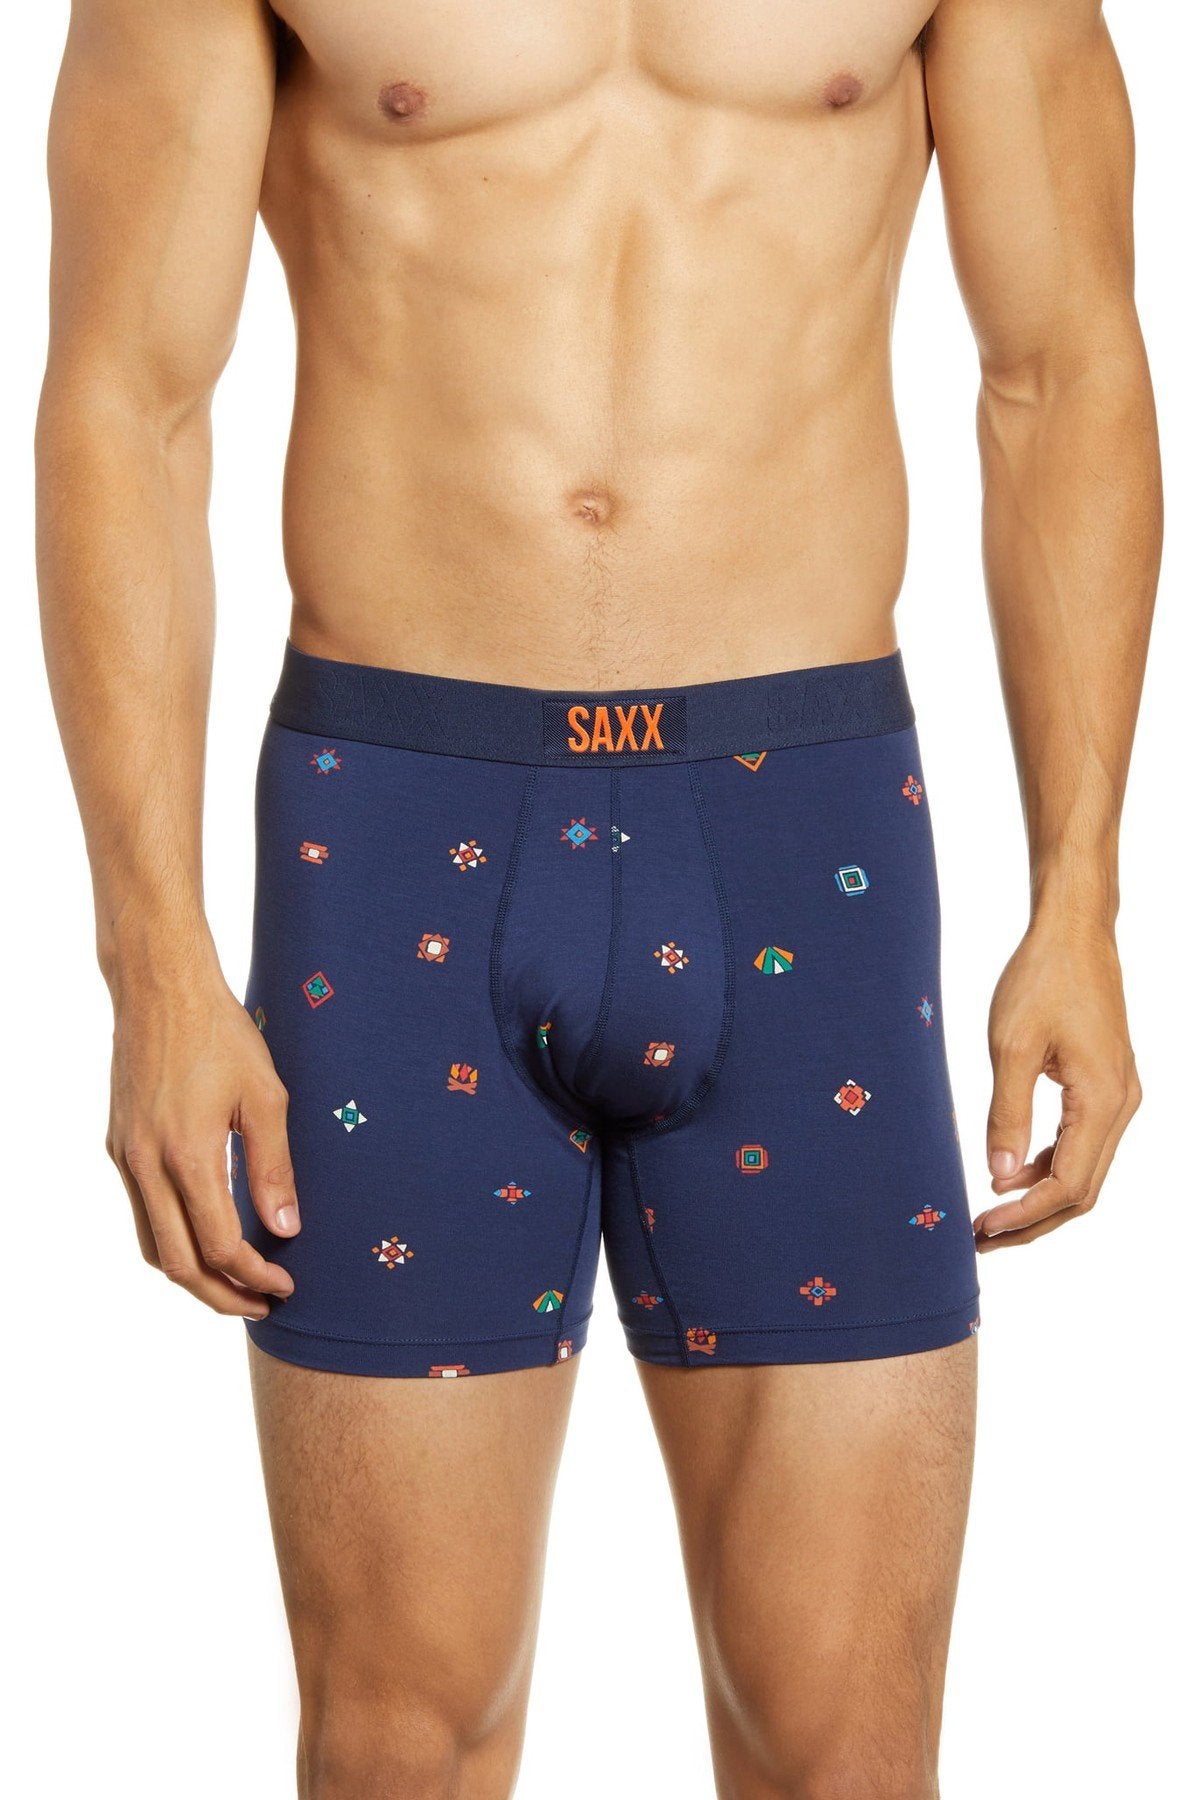 Saxx Underwear Vibe Slim TMB